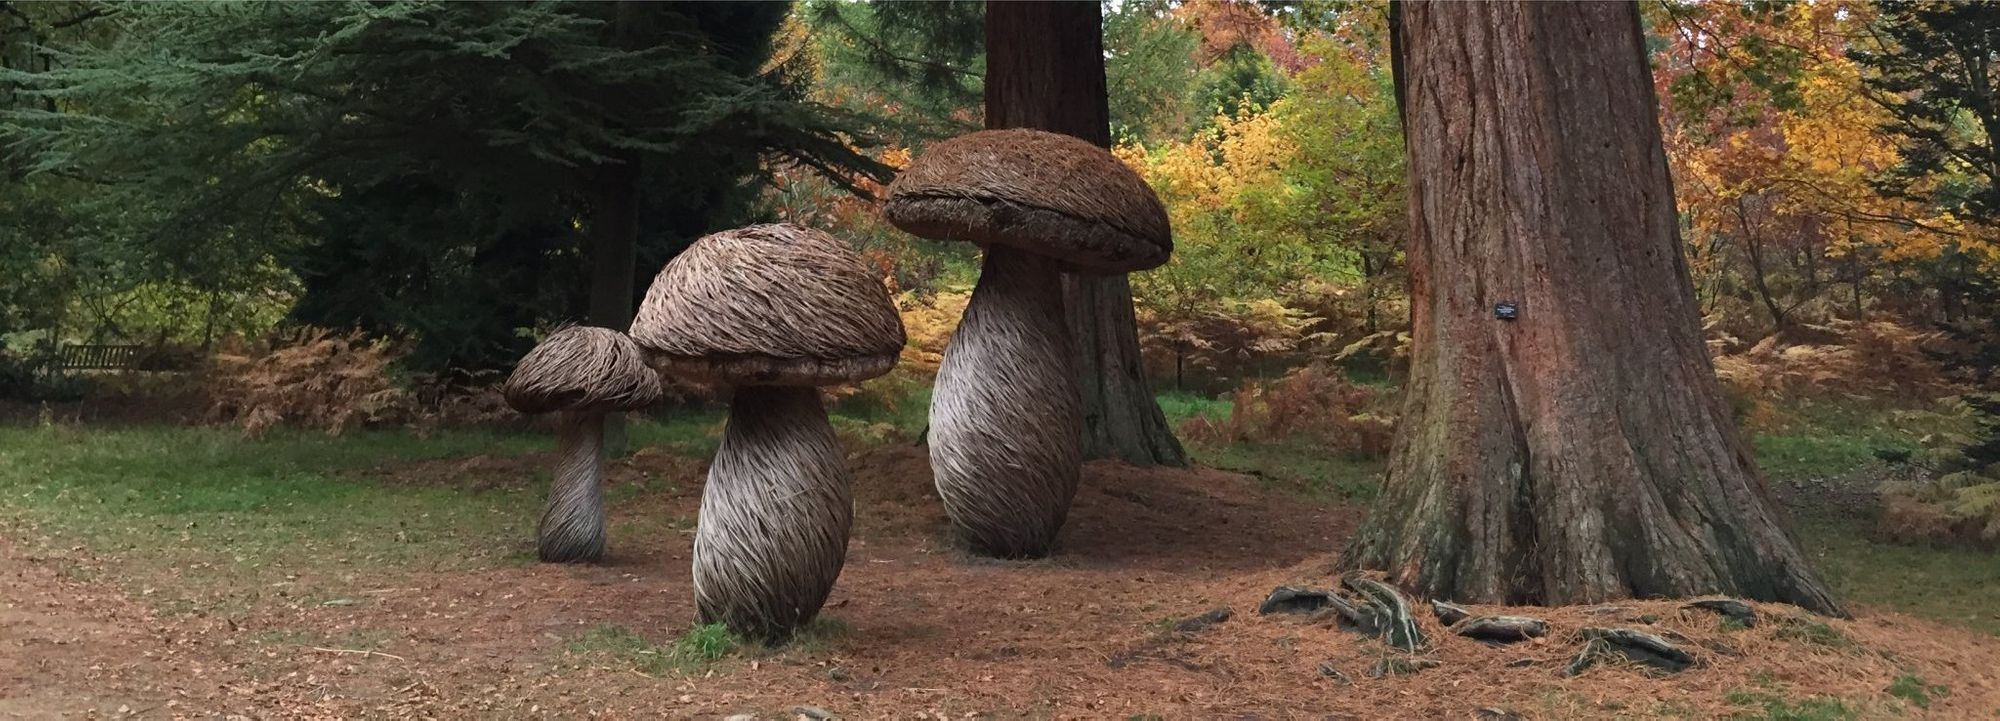 The mushrooms of Normus